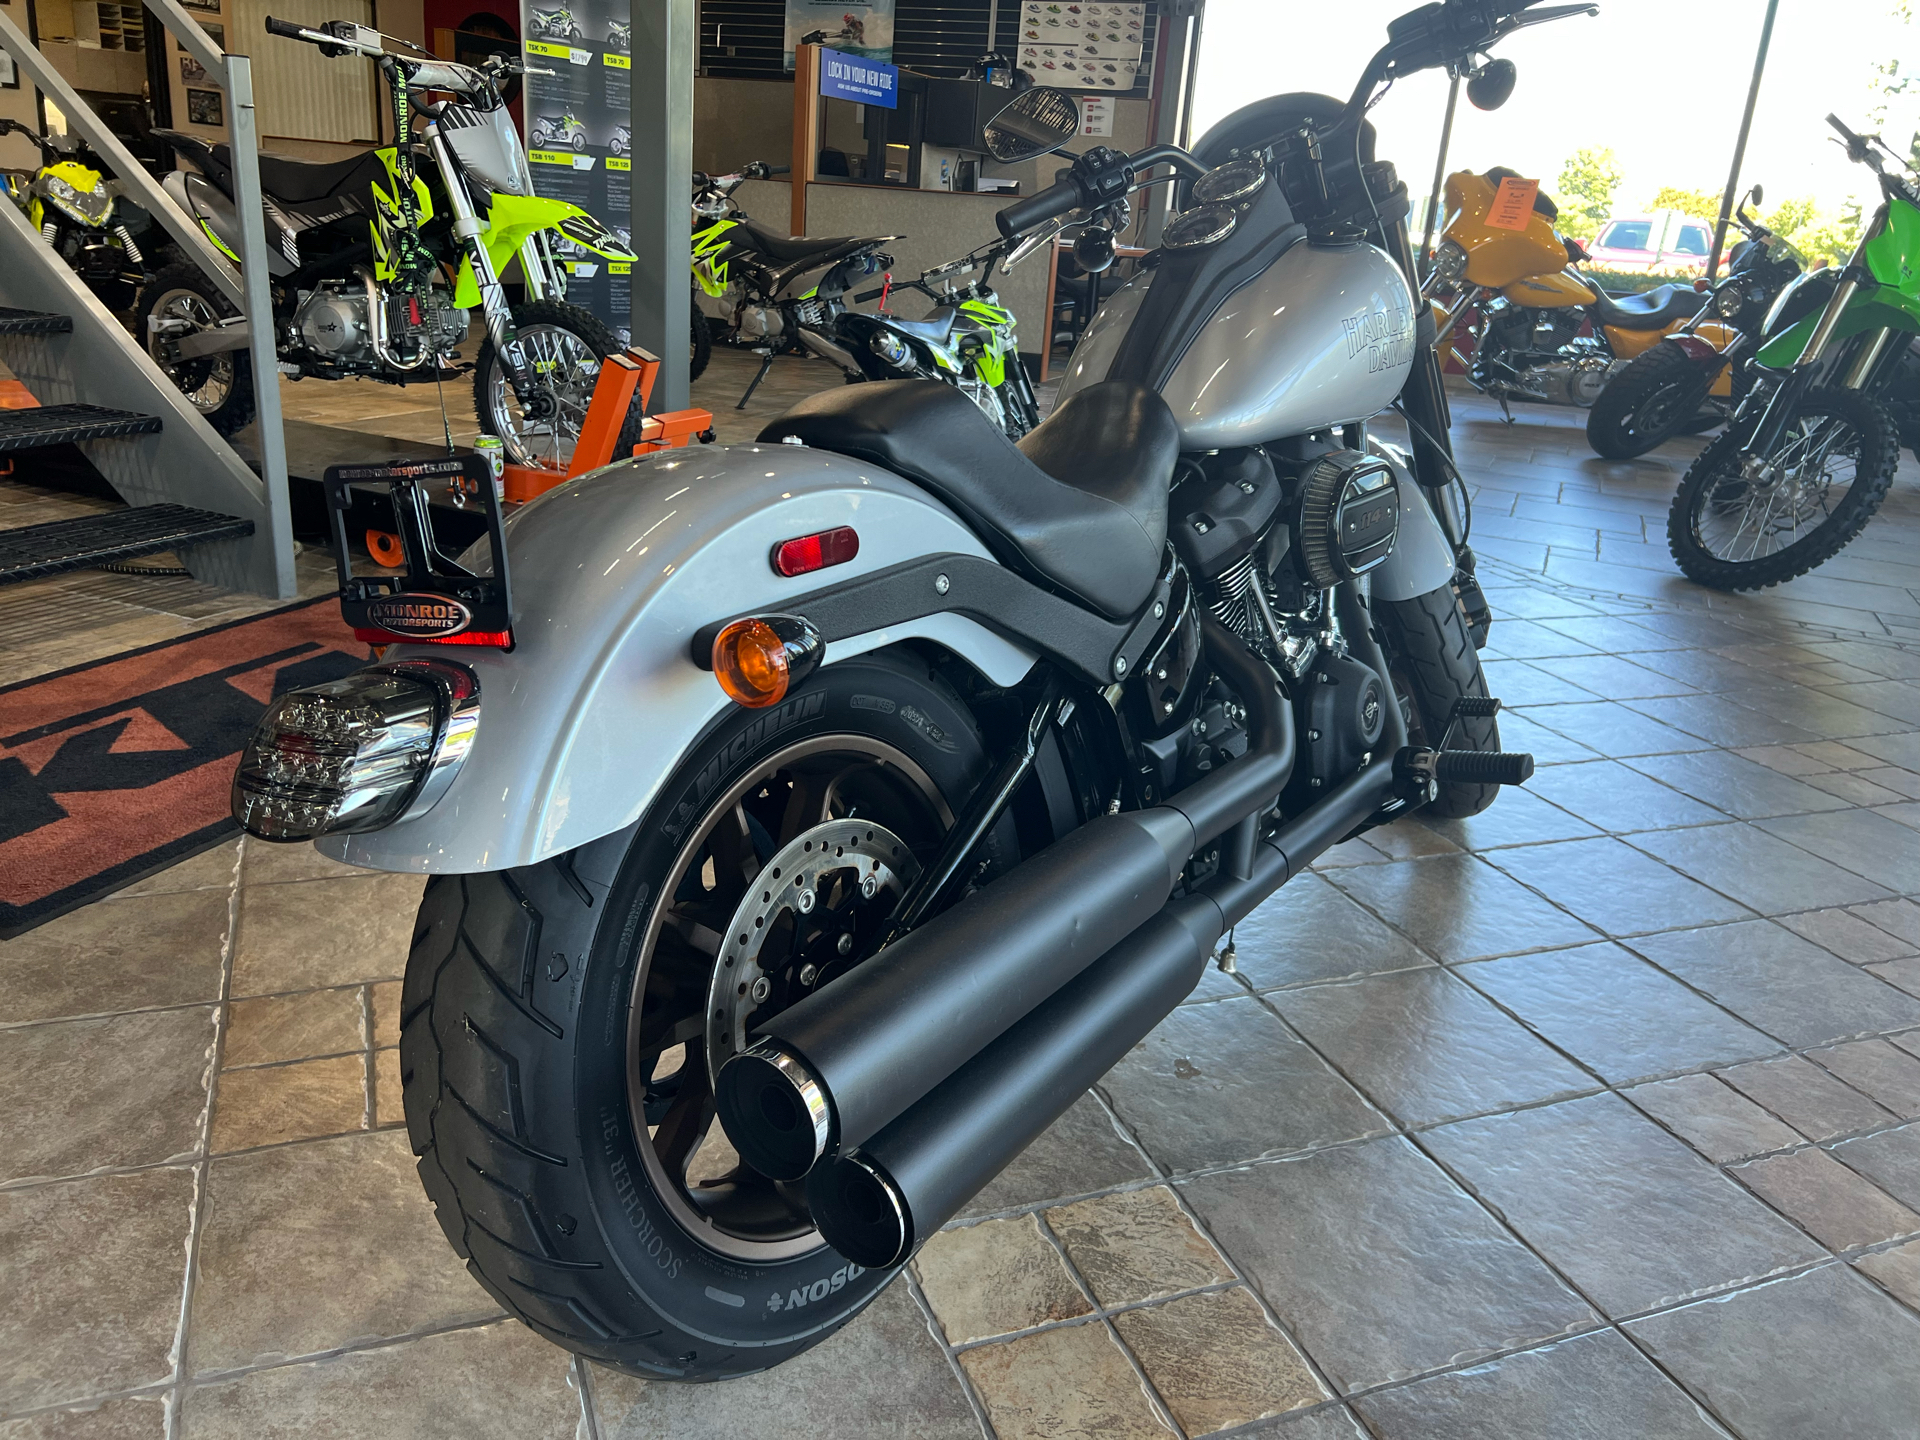 2020 Harley-Davidson Low Rider®S in Monroe, Michigan - Photo 8